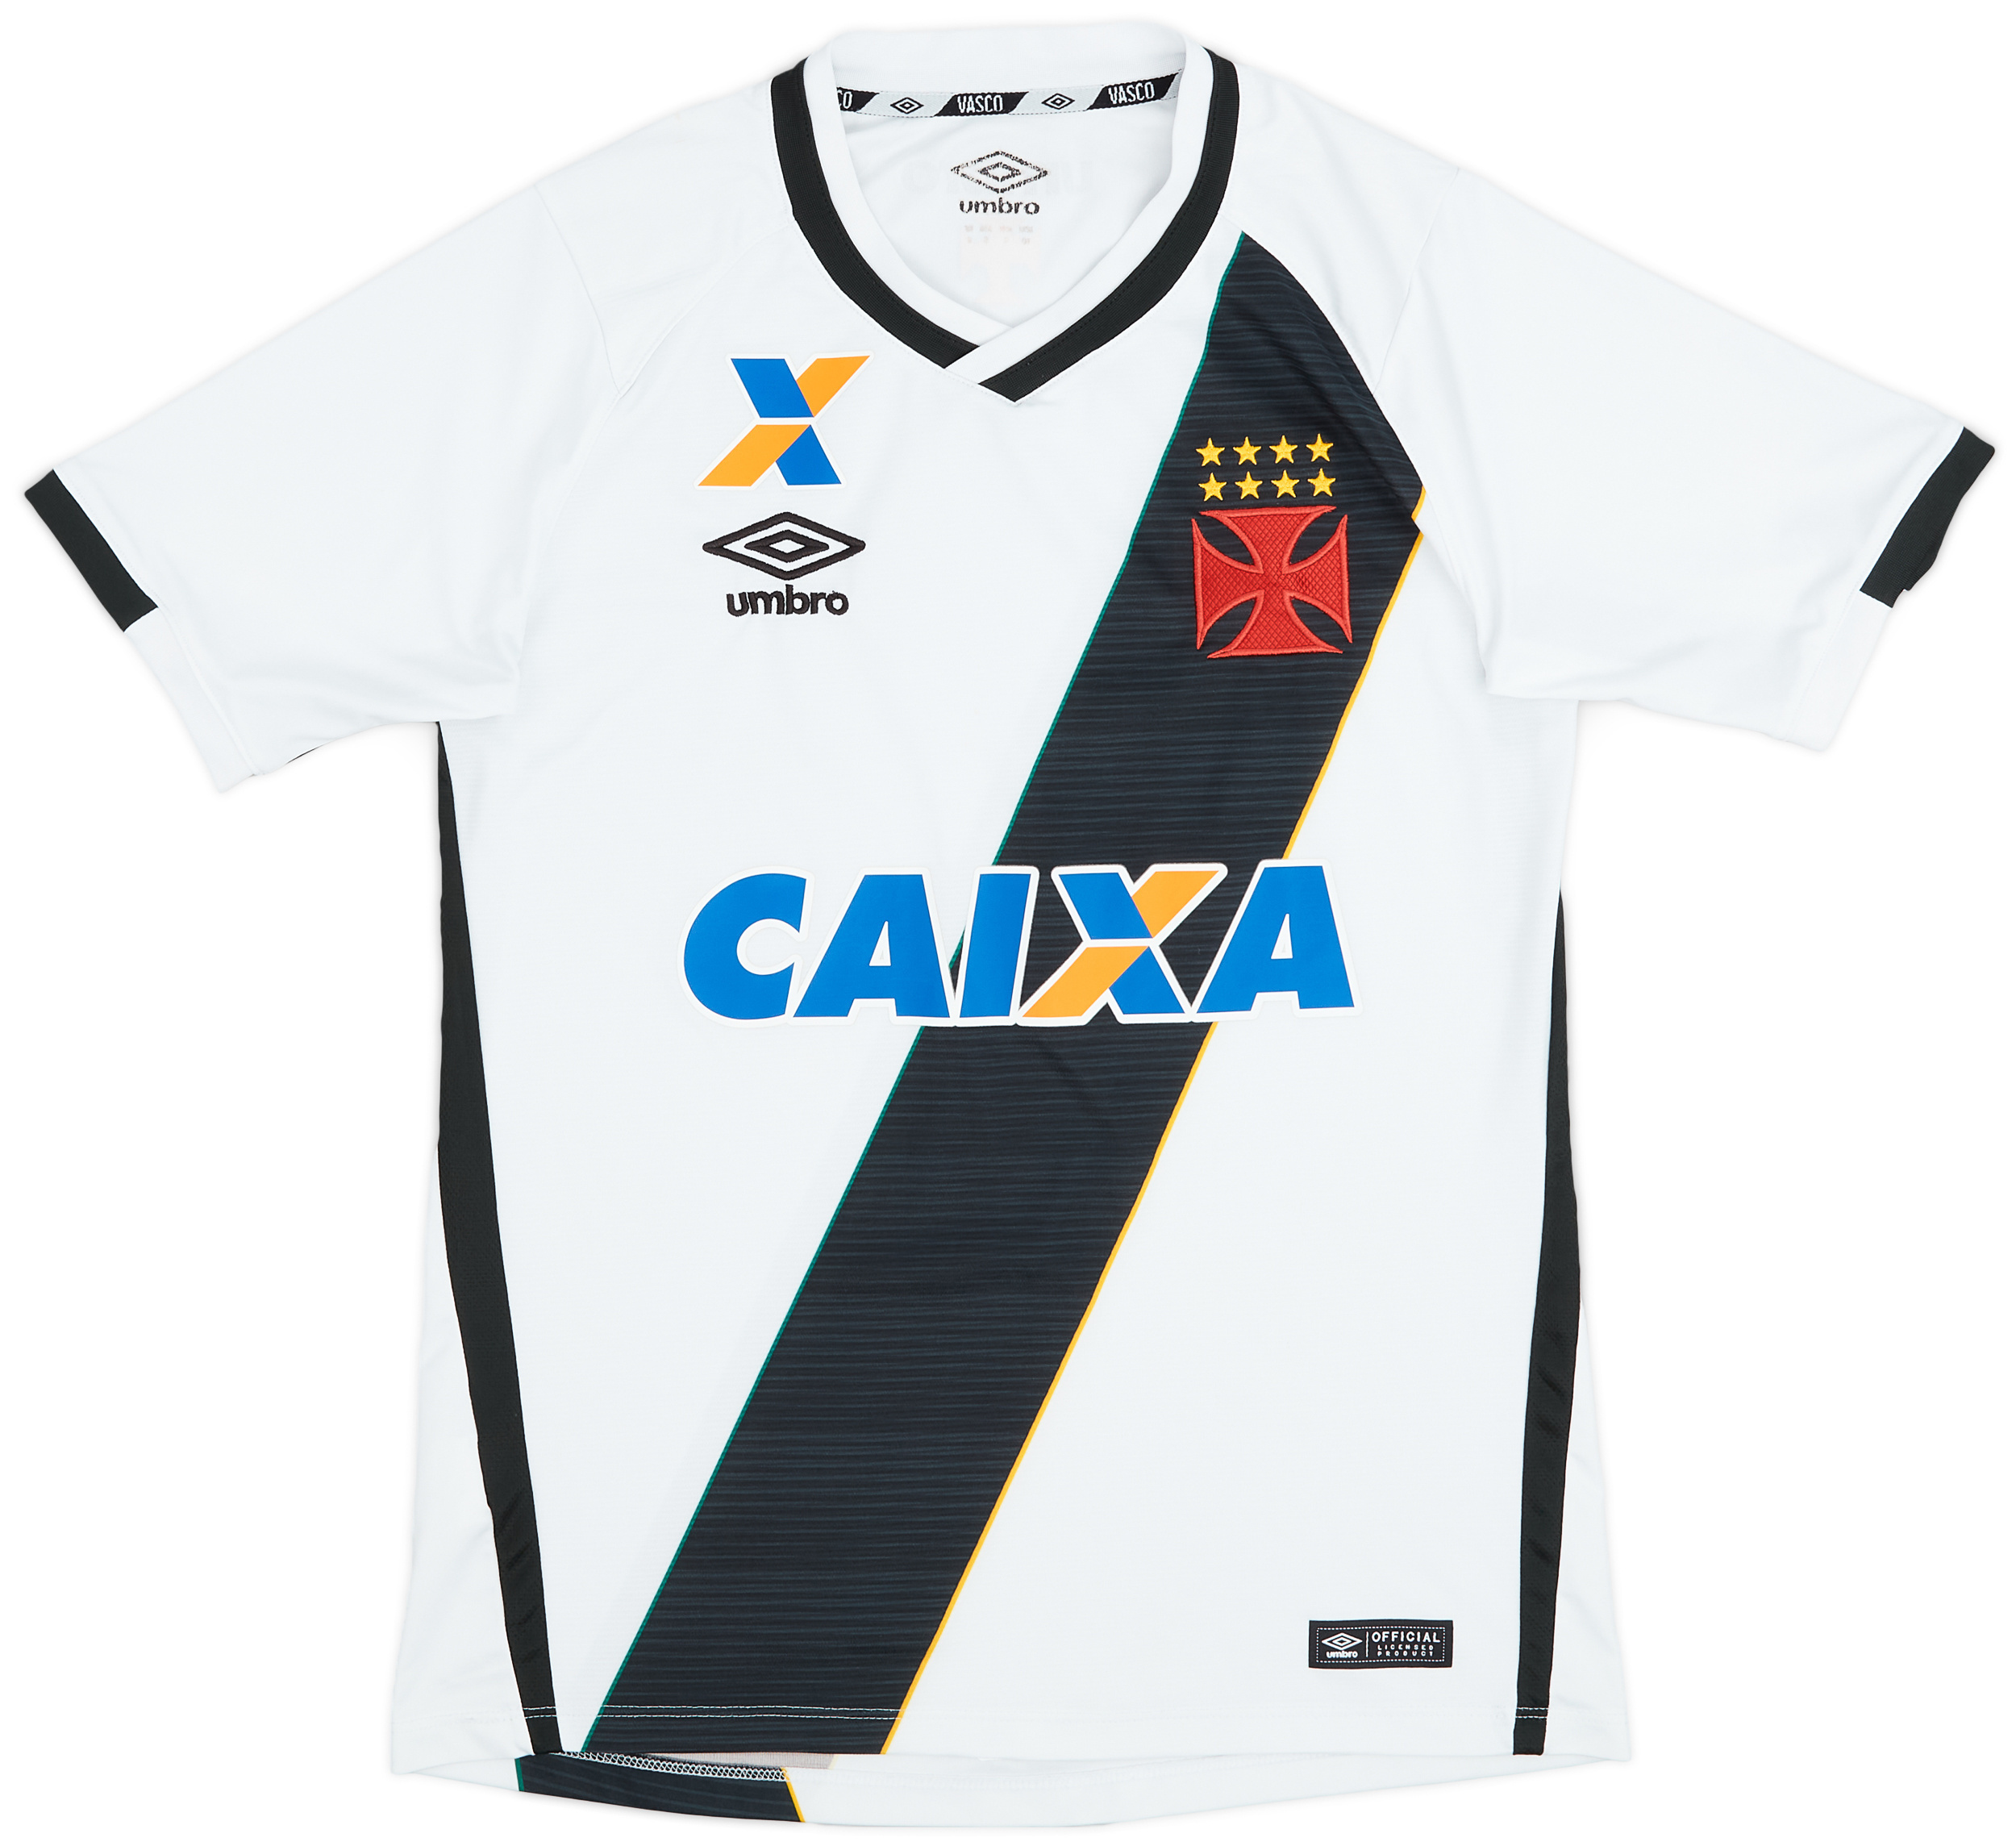 Vasco da Gama  Uit  shirt  (Original)